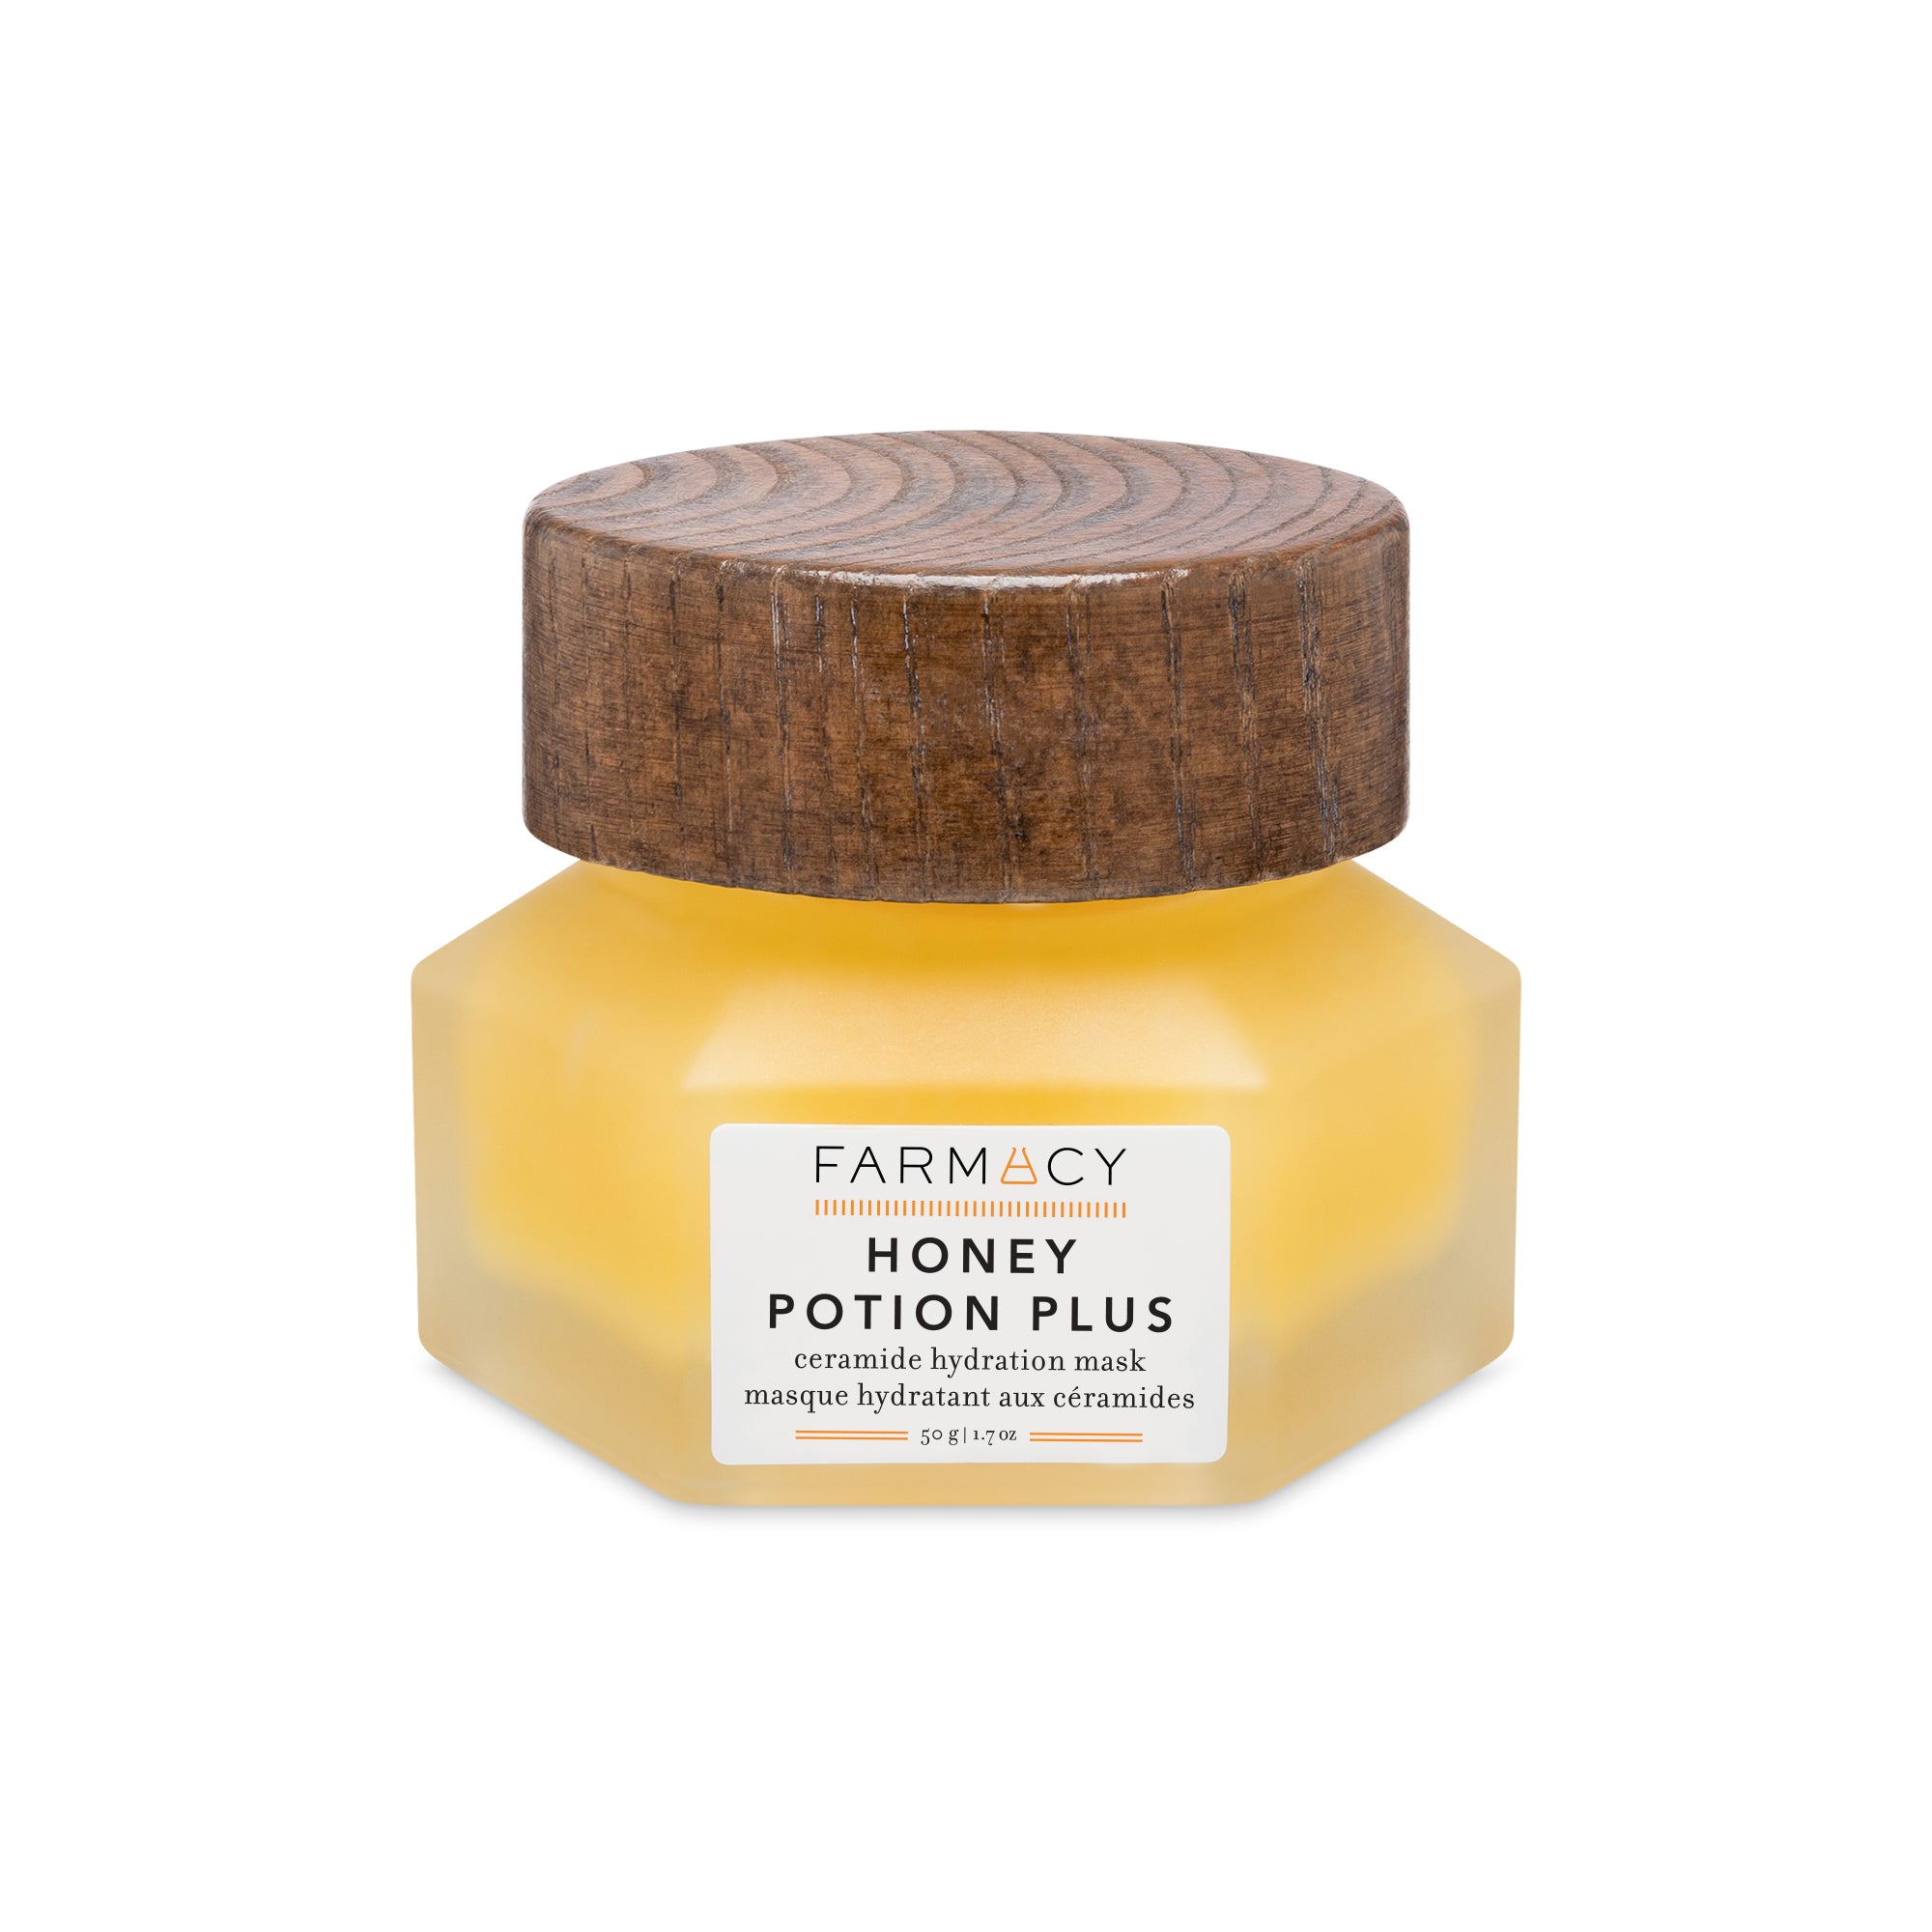 A bottle of Farmacy Honey Potion Plus Mini